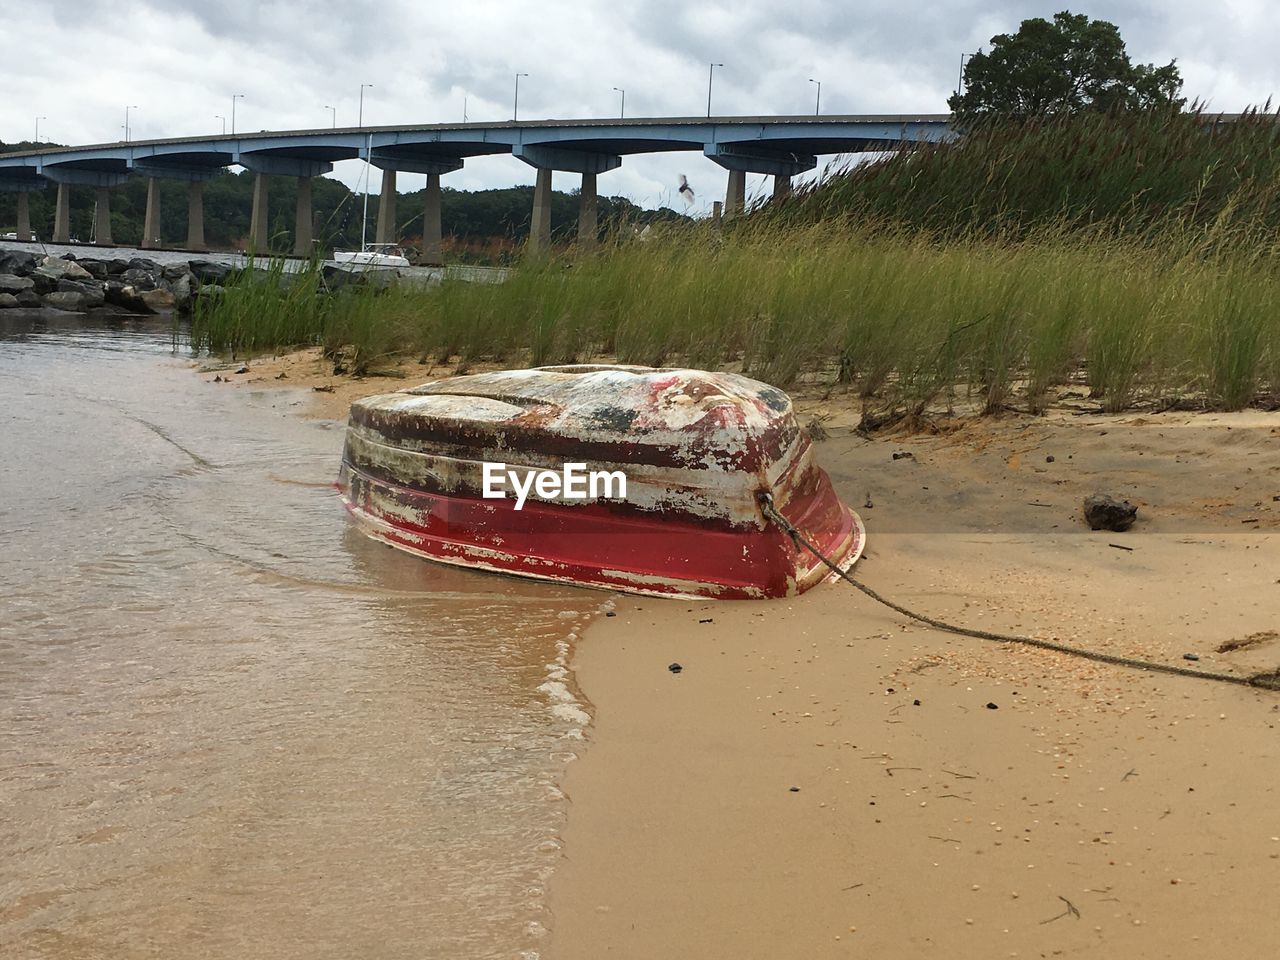 Overturned boat moored on river beach near bridge